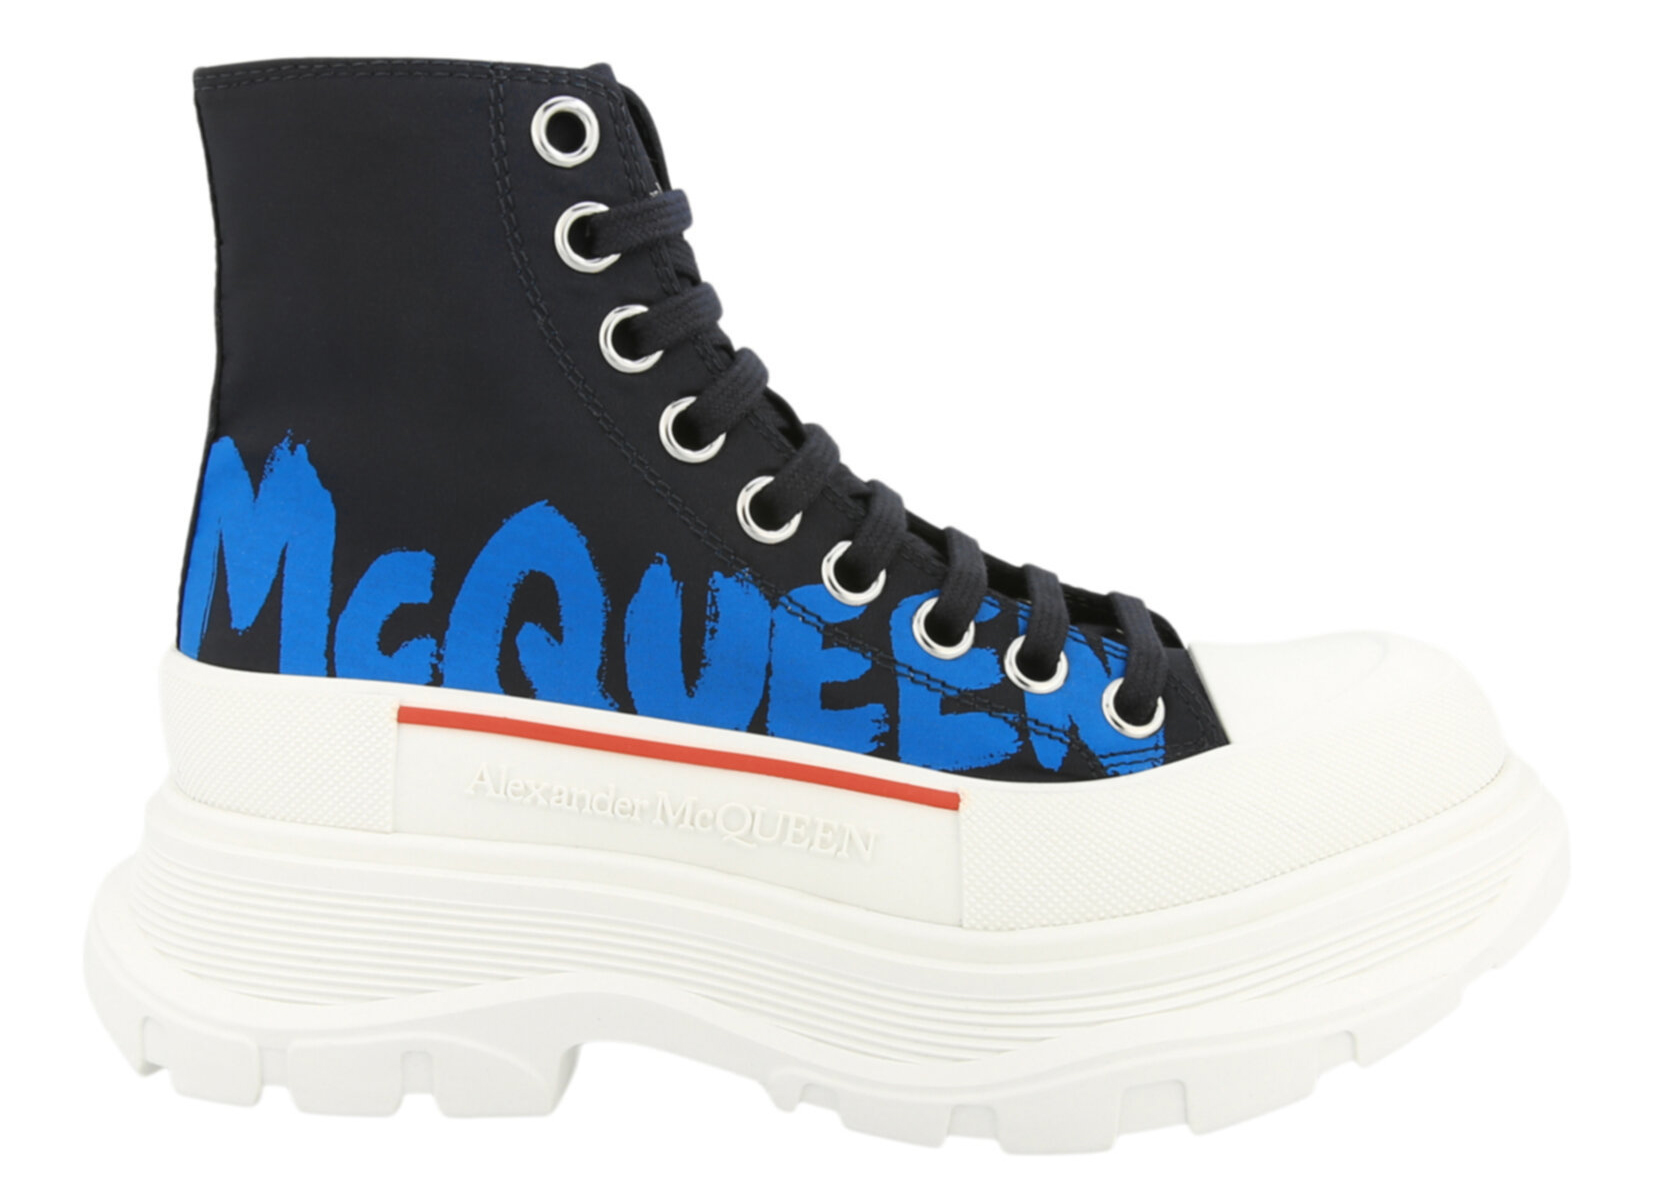 Alexander McQueen Tread Slick Boots Graffiti Logo Blue (Women's)